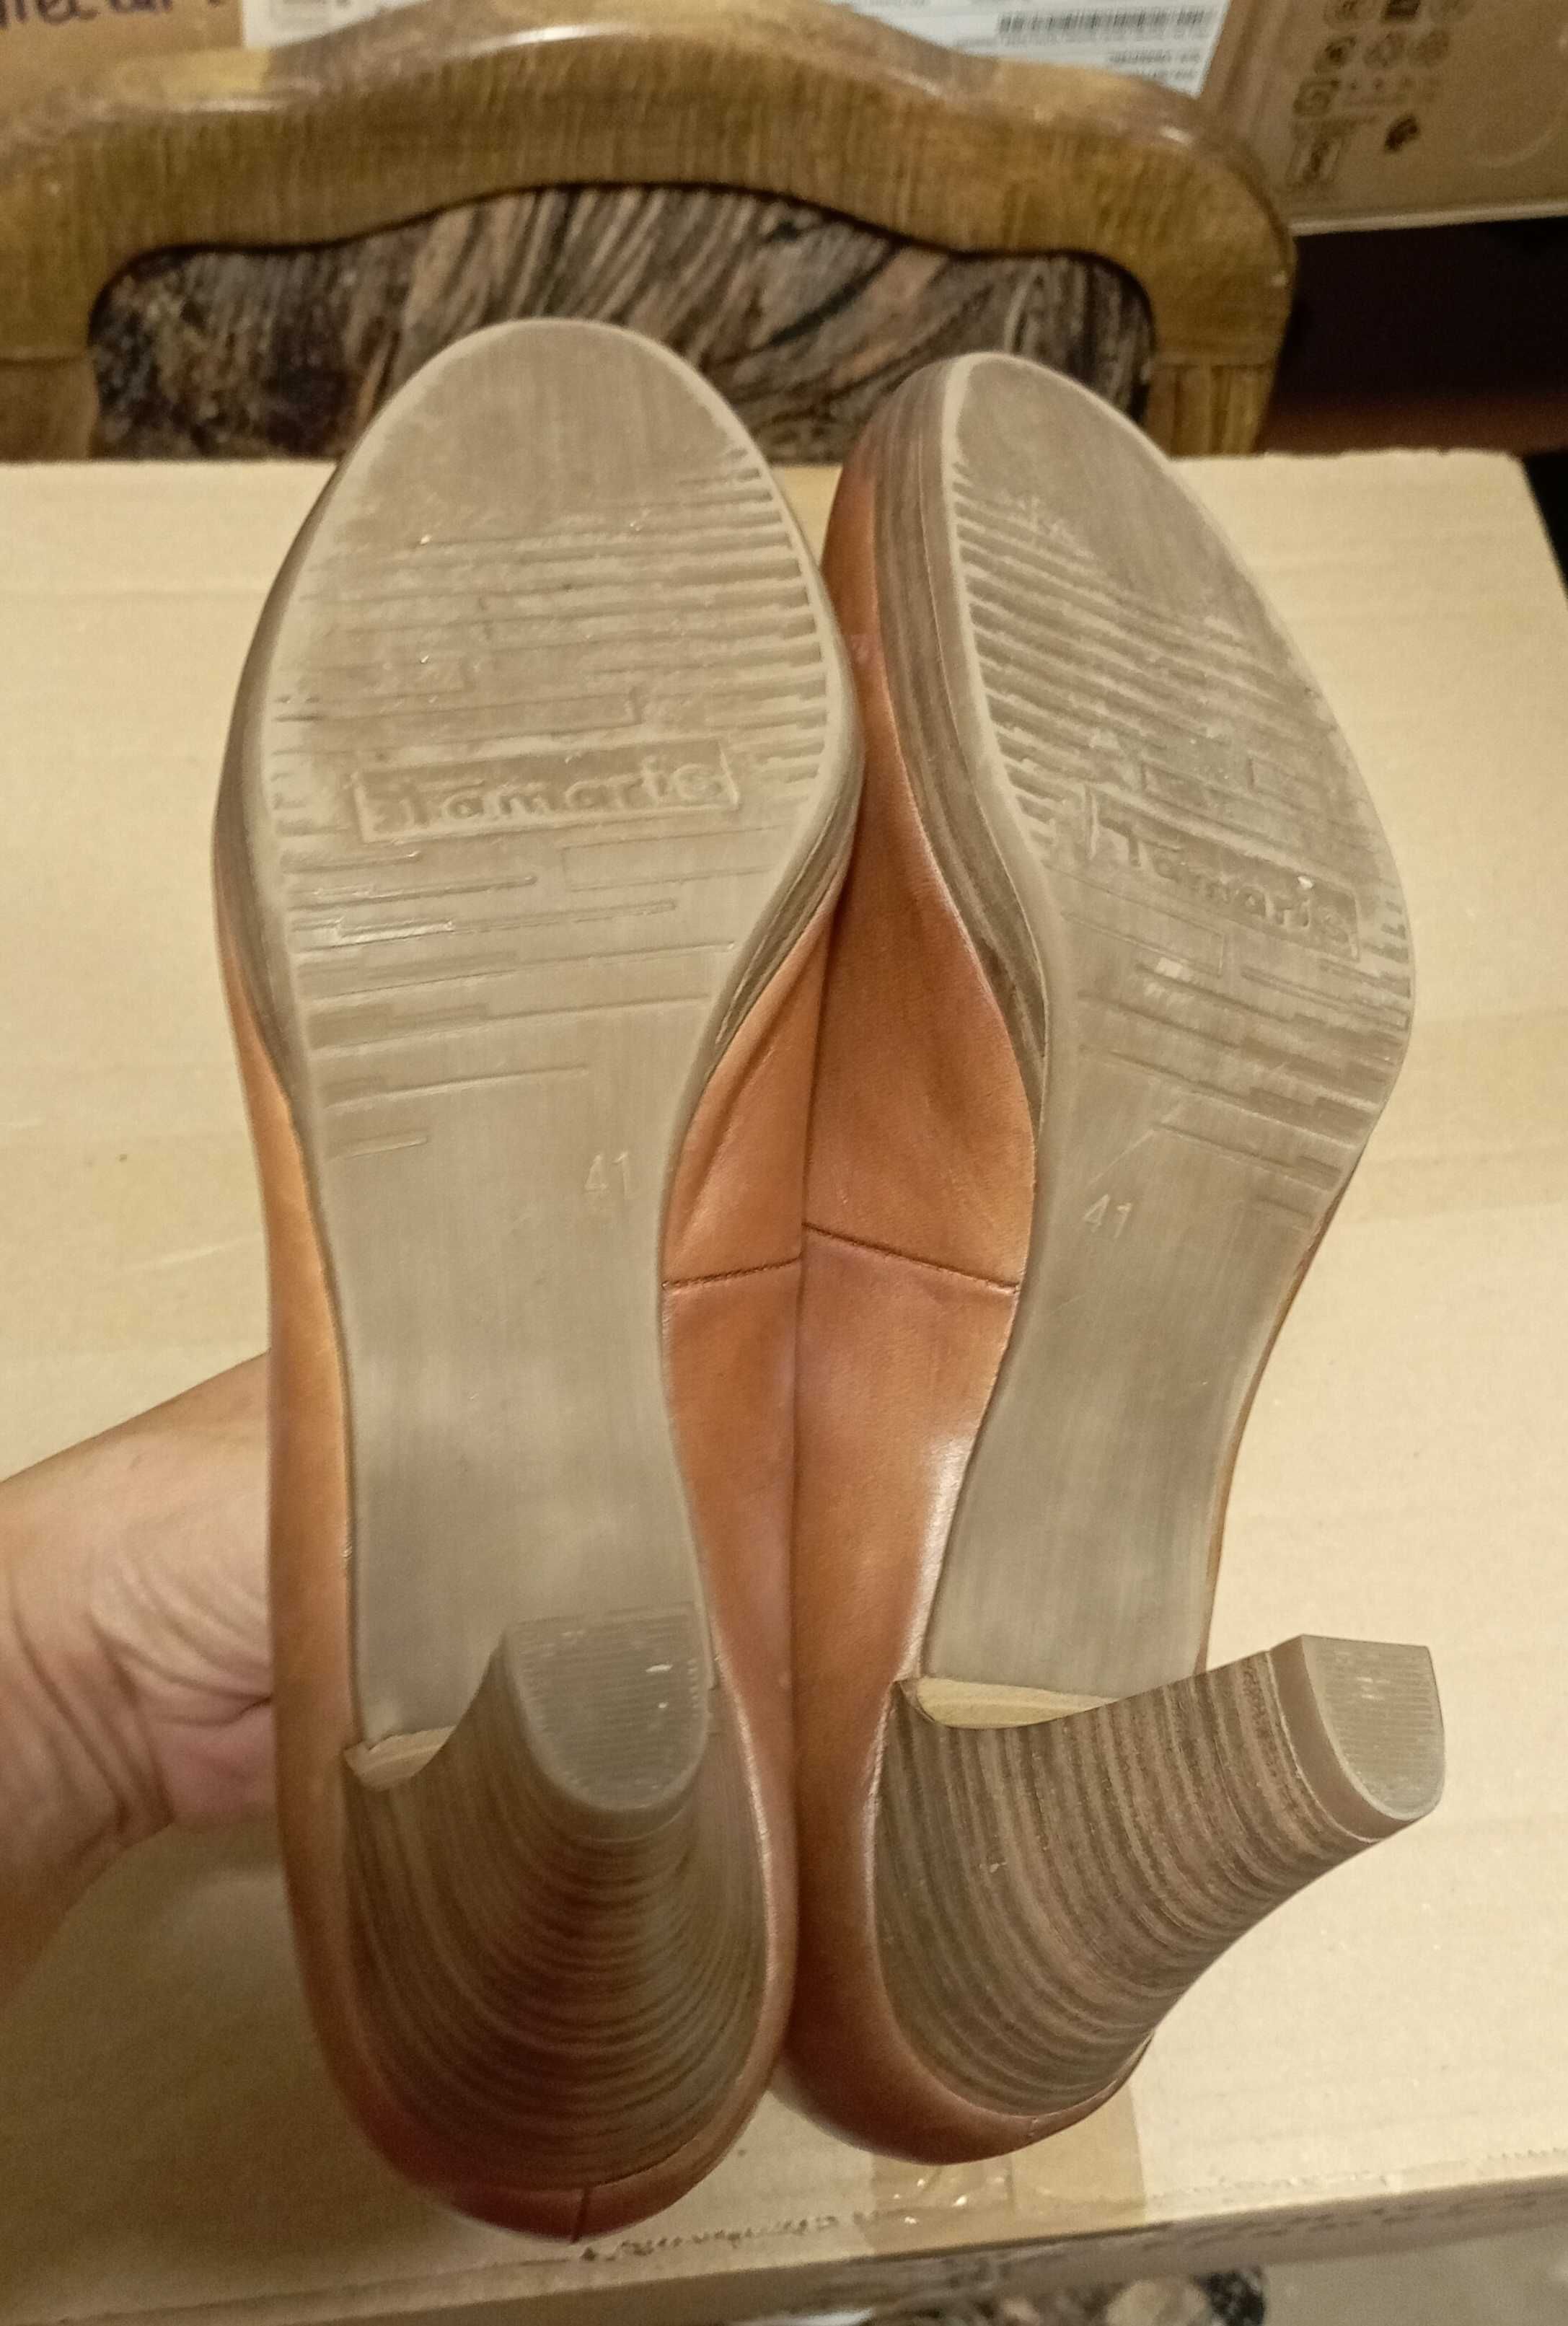 Дамски обувки естествена кожа, Tamaris, №41, стелка 25,5см.